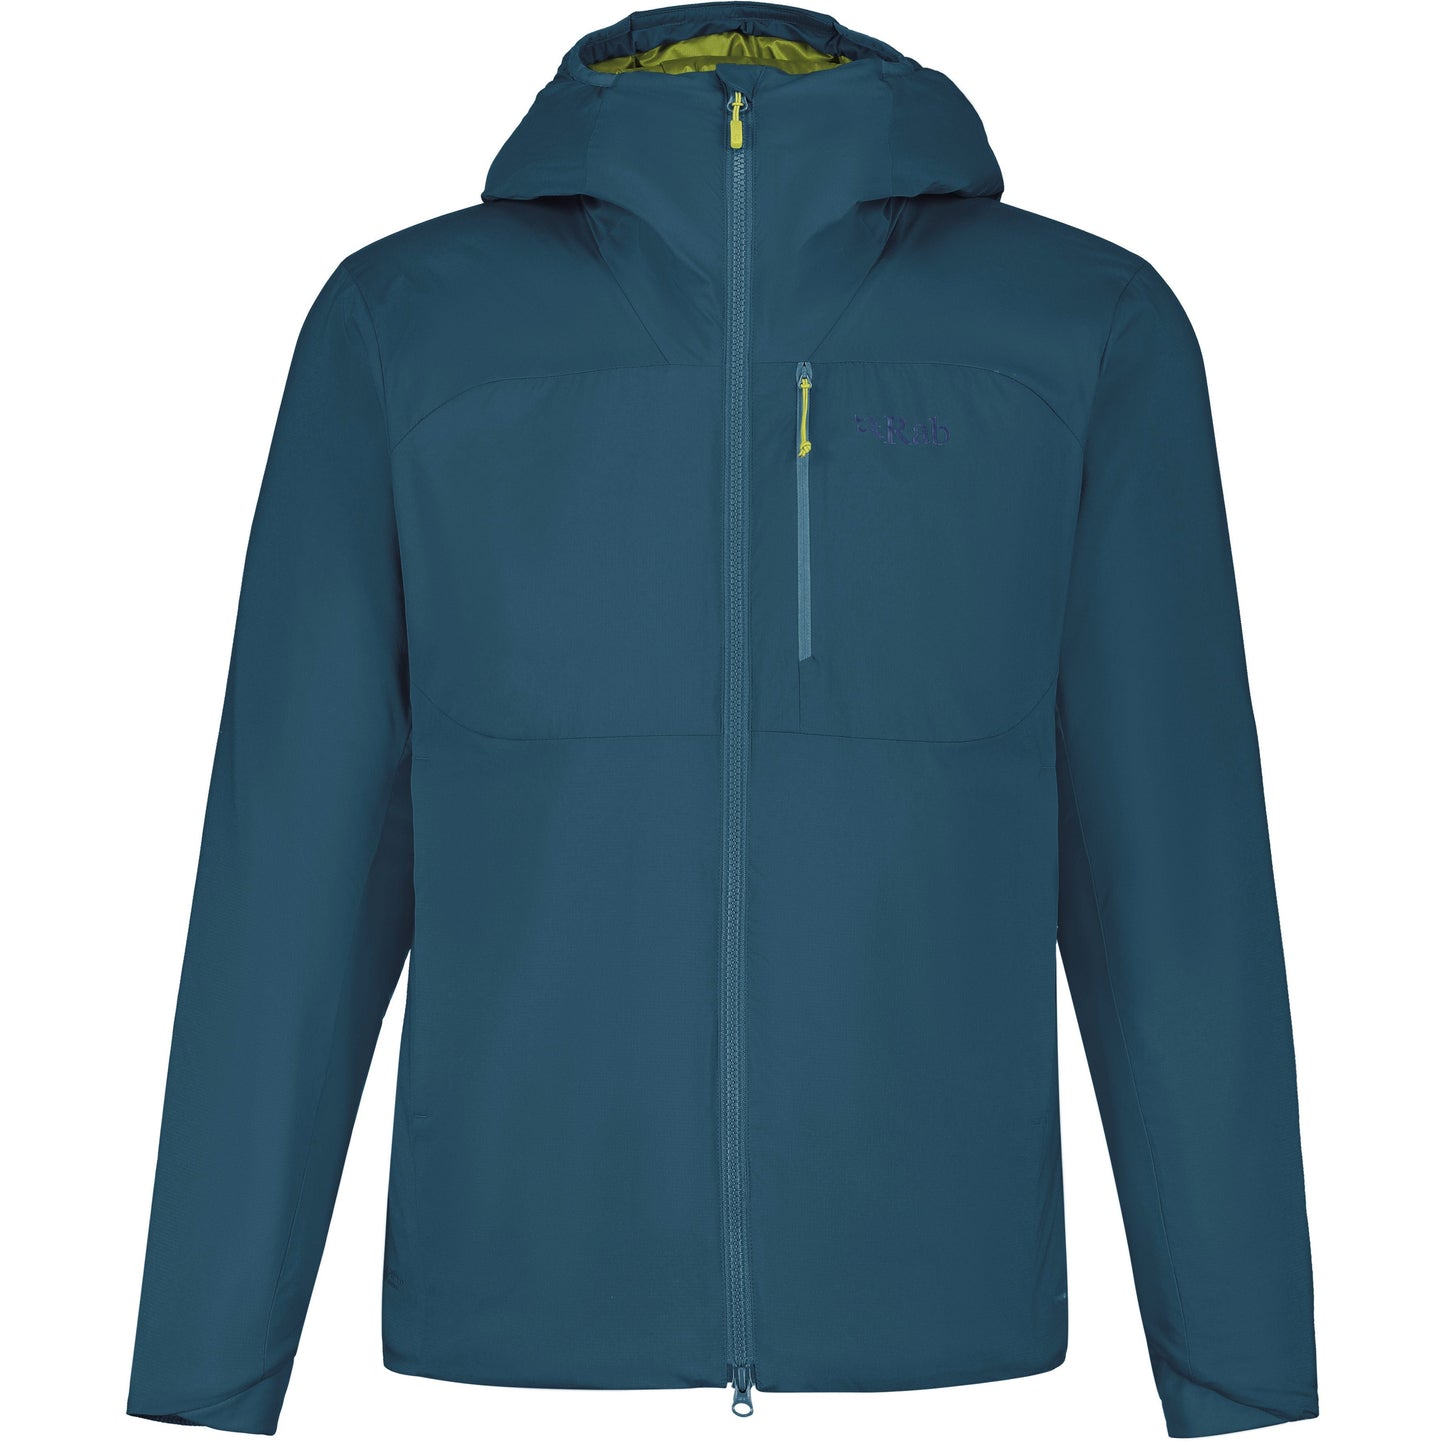 Xenair alpine jacket in Orion Blue 